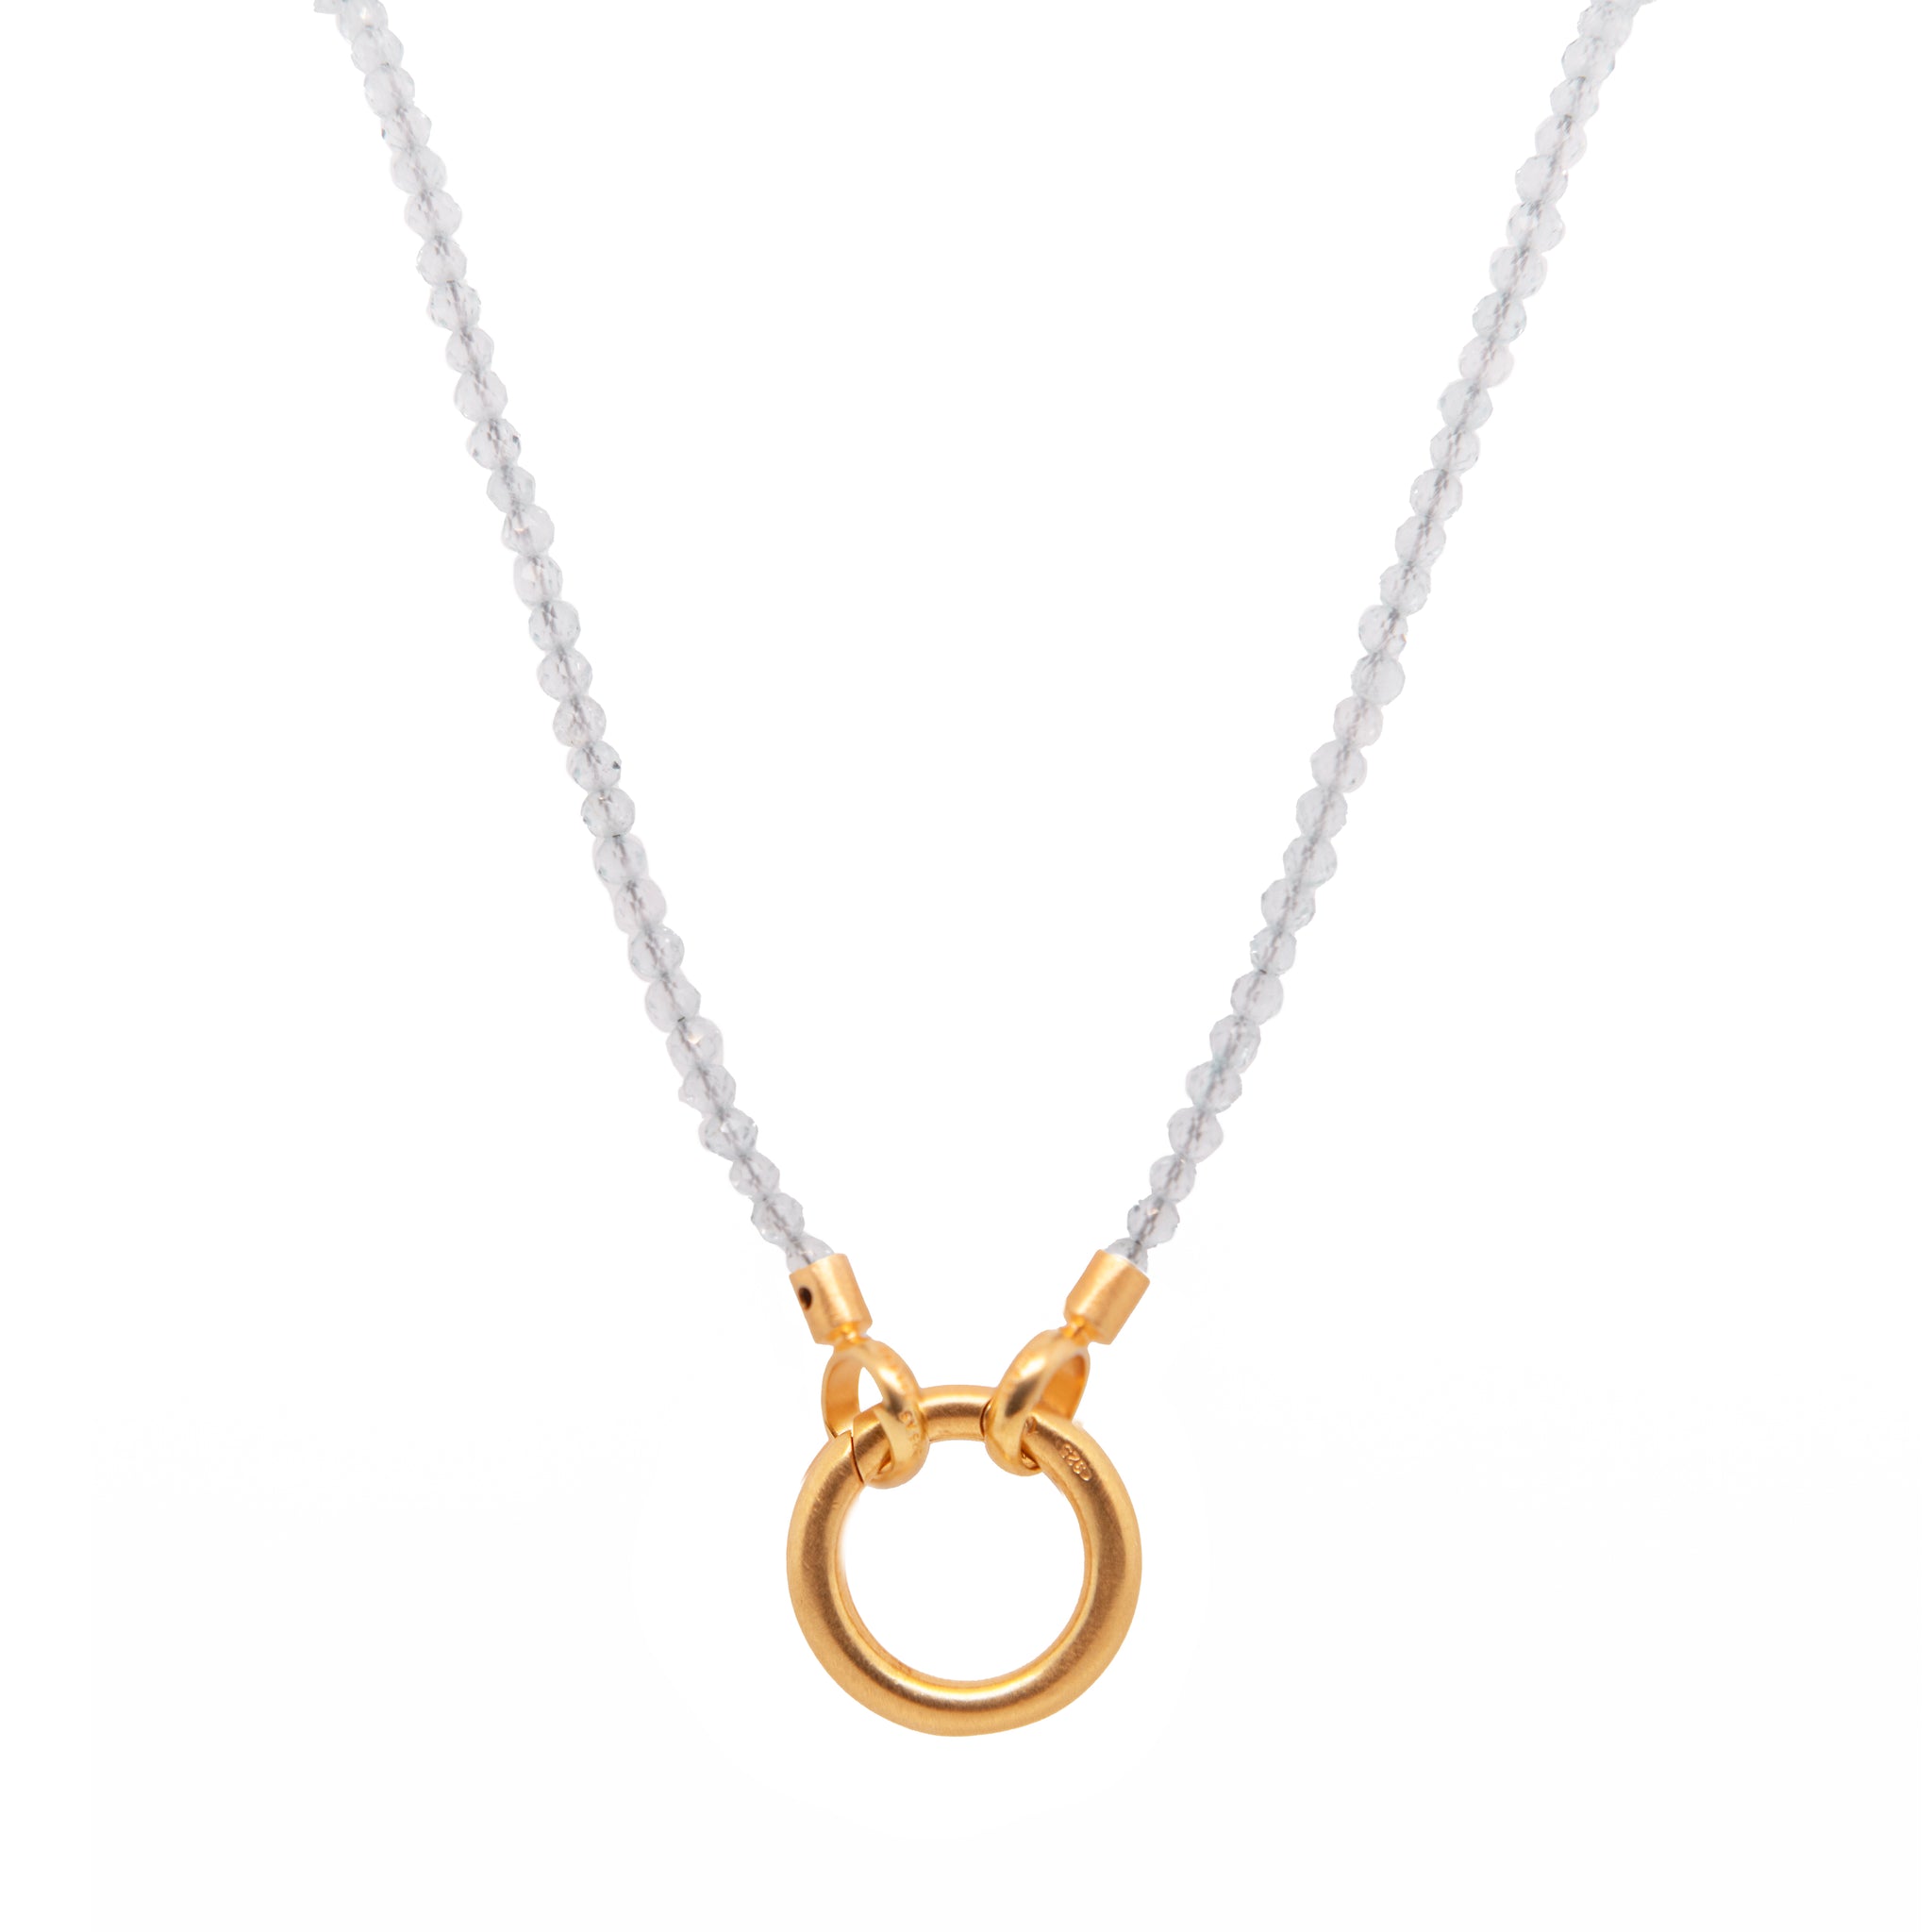 Ring Clasp Rainbow Moonstone Necklace  17" 24K Fair Trade Gold Vermeil